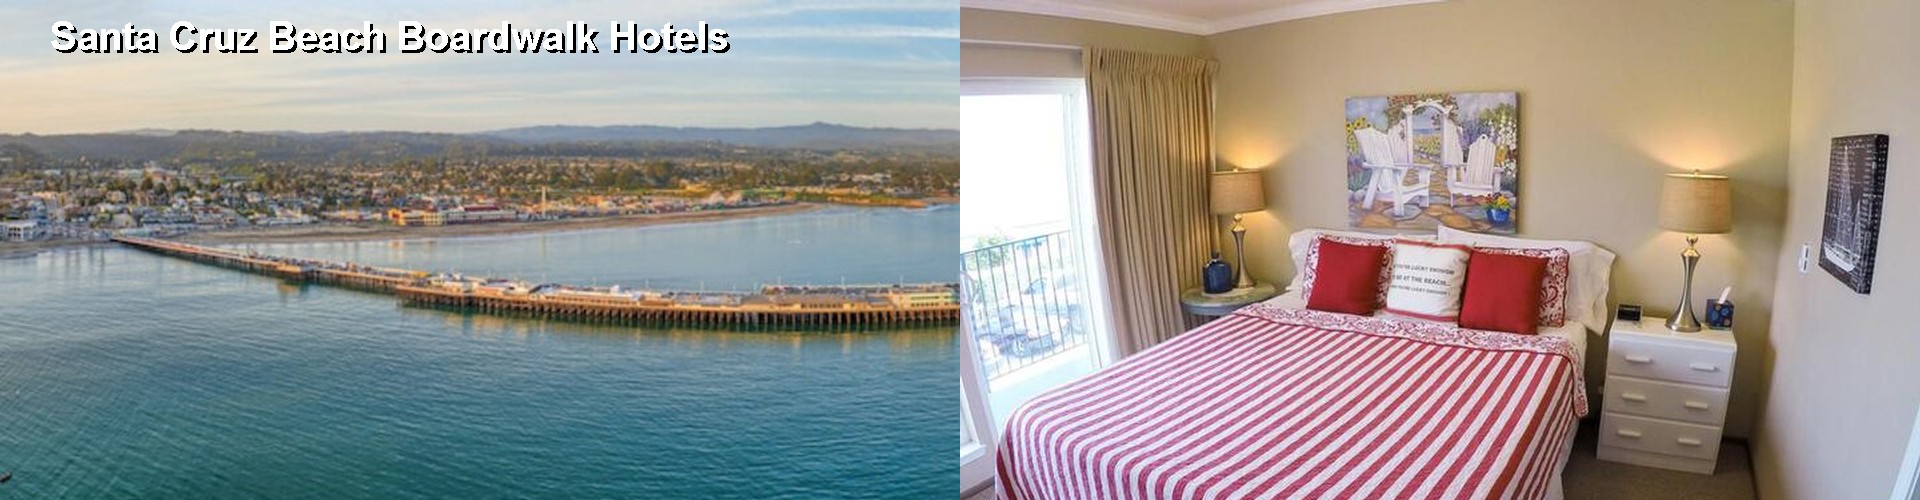 4 Best Hotels near Santa Cruz Beach Boardwalk